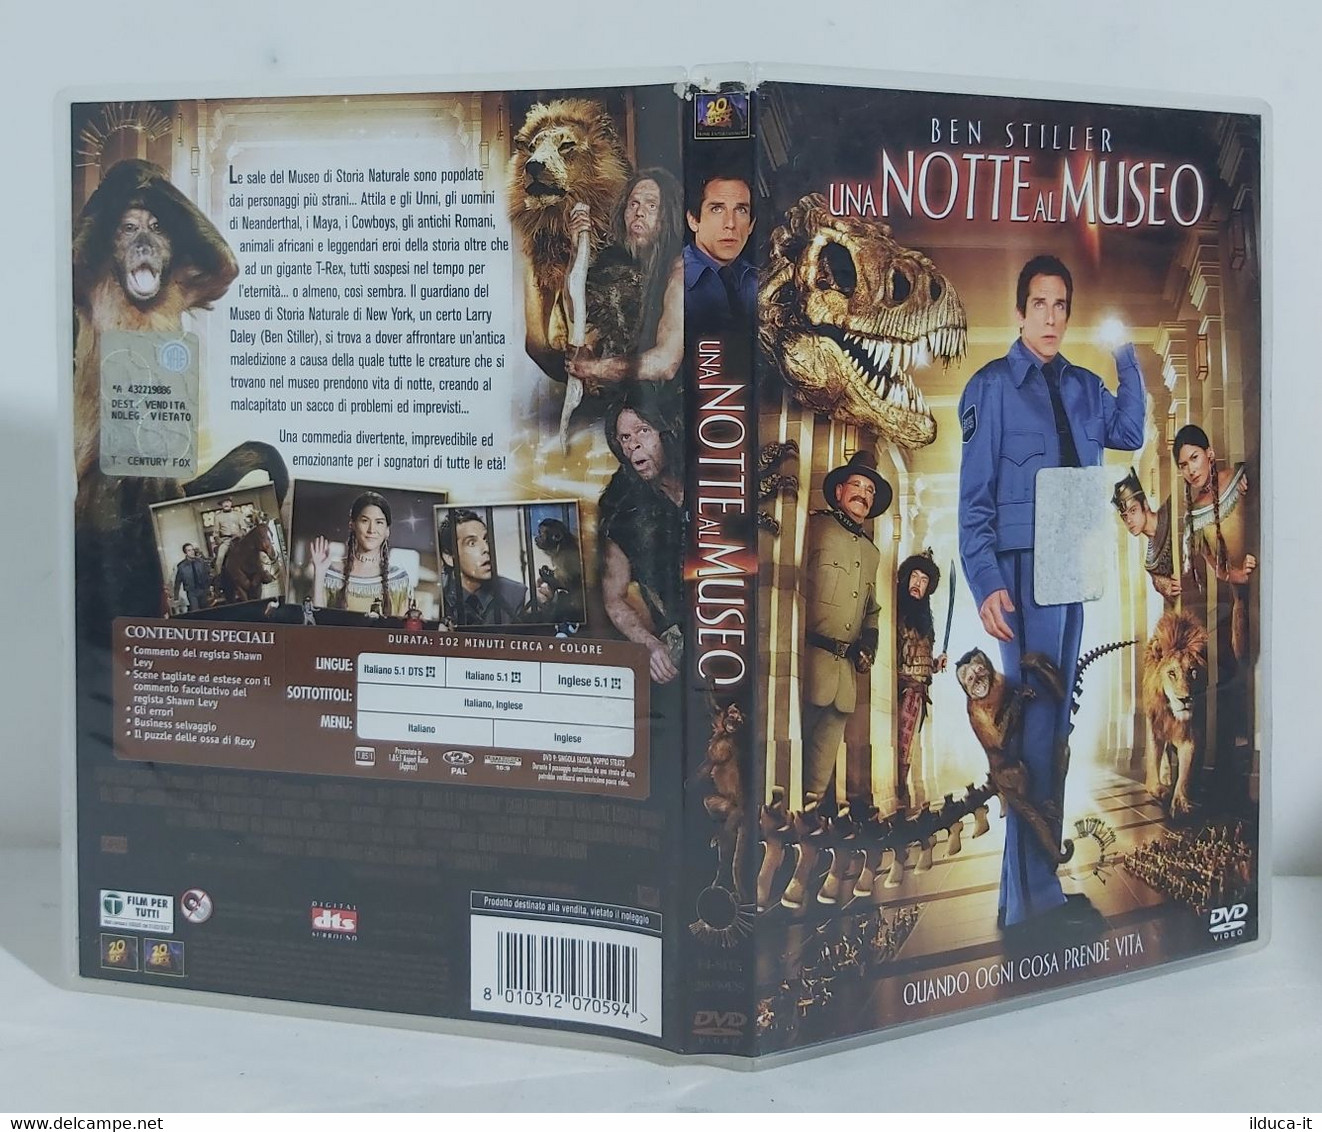 I102780 DVD - UNA NOTTE AL MUSEO (2006) - Ben Stiller - Mystery